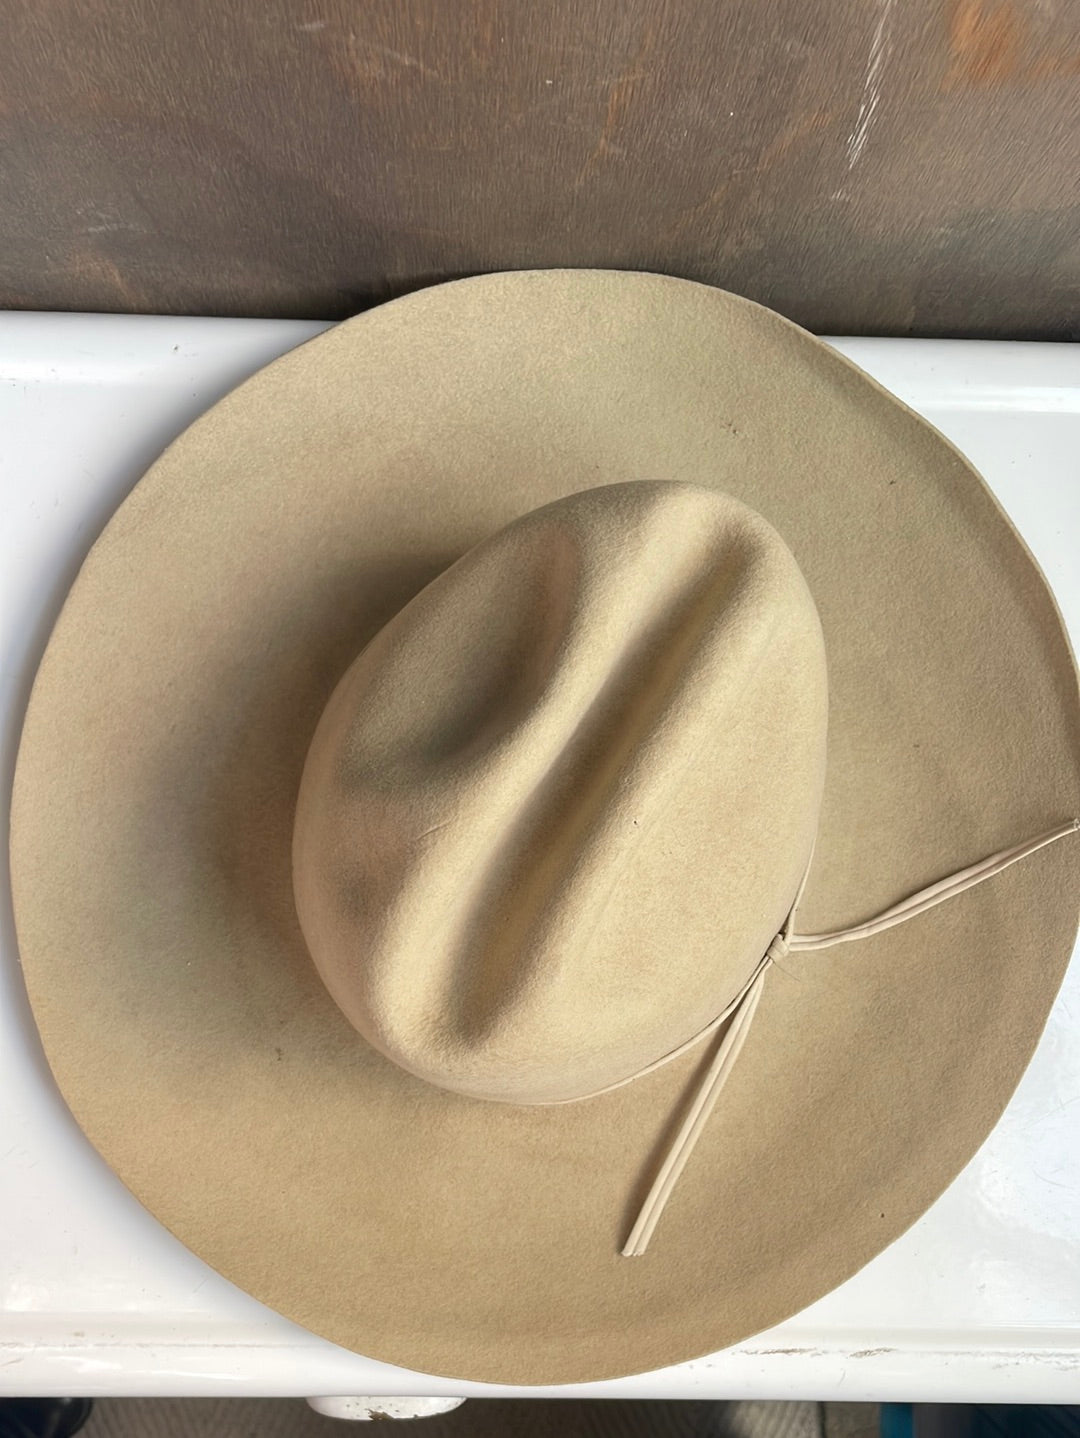 Vintage Bronco Beaver Felt Hat